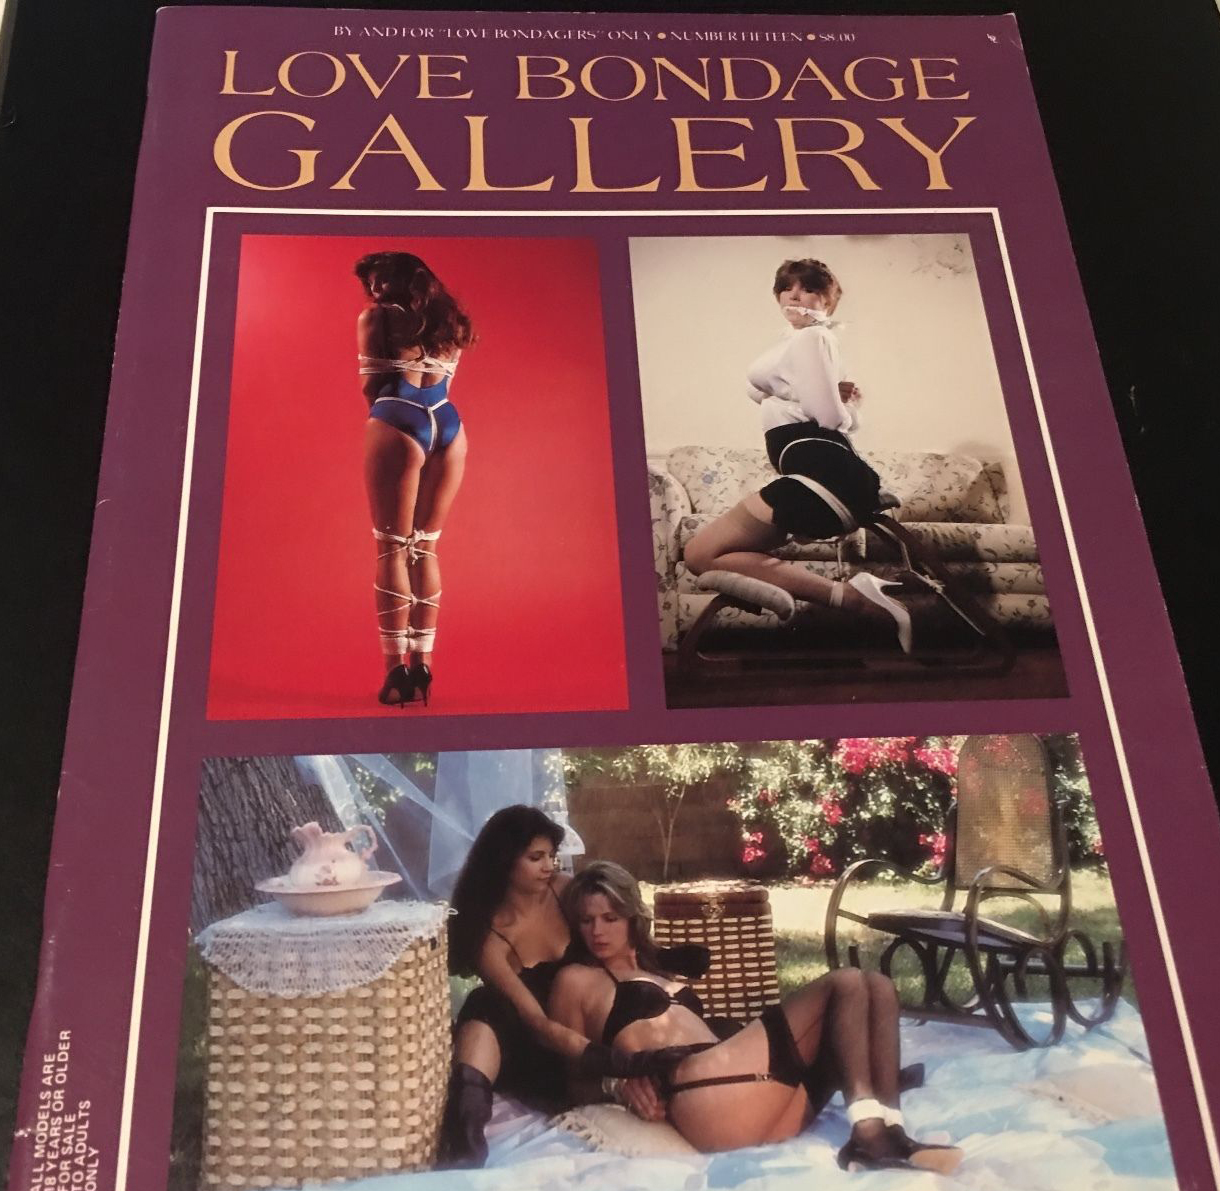 Love Bondage Gallery # 15 magazine back issue Love Bondage Gallery magizine back copy 